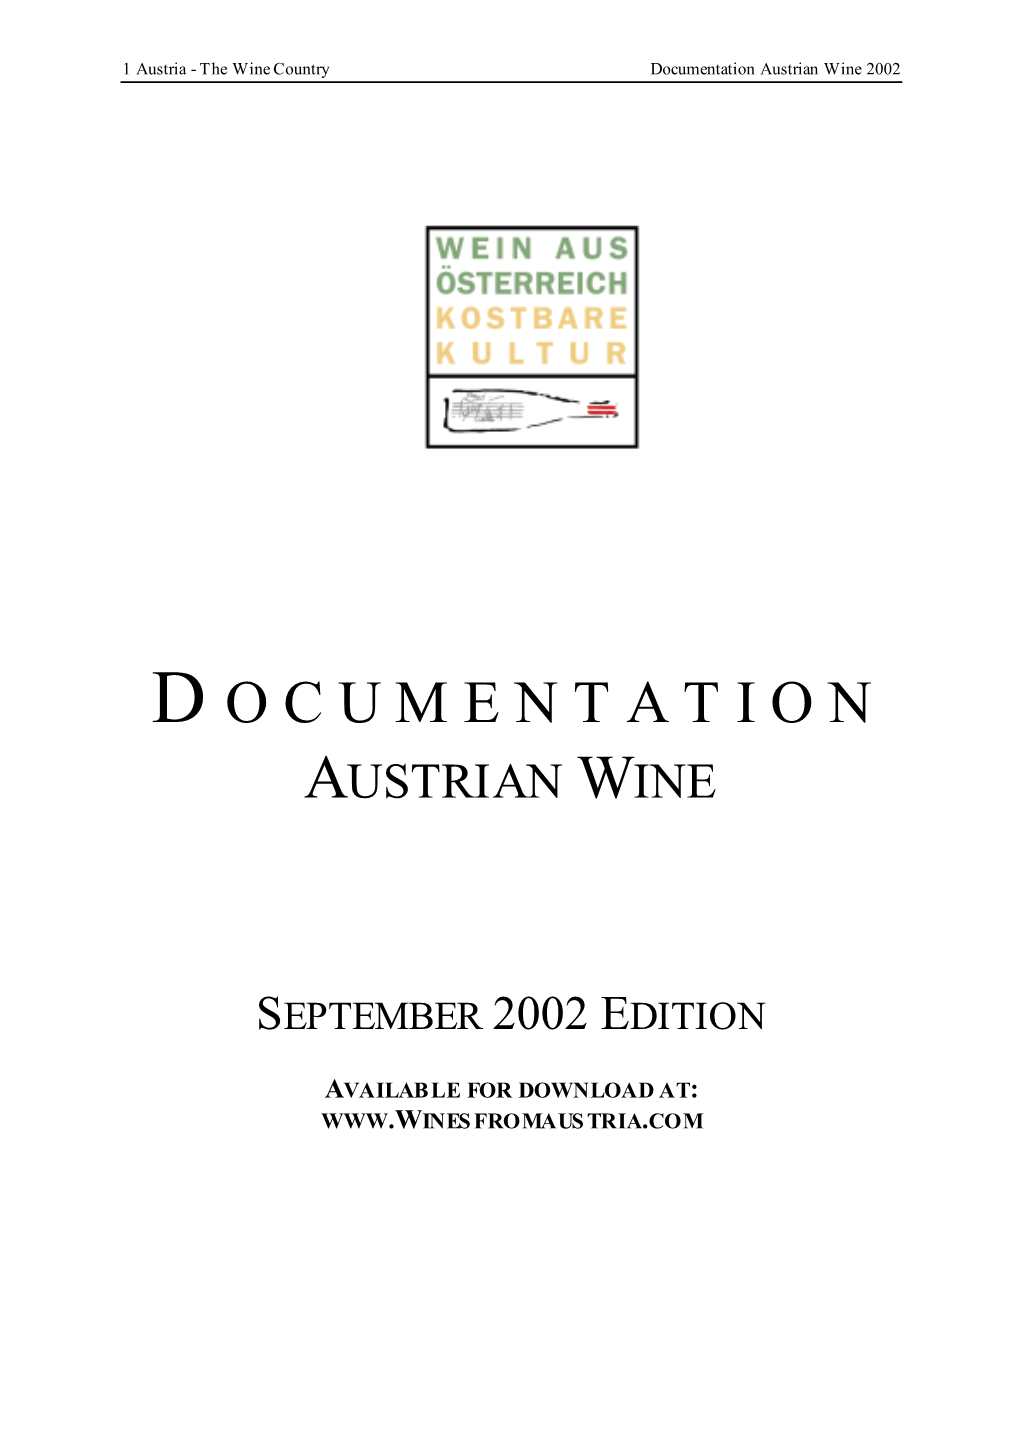 Austrian Wine Statistics Report 2002